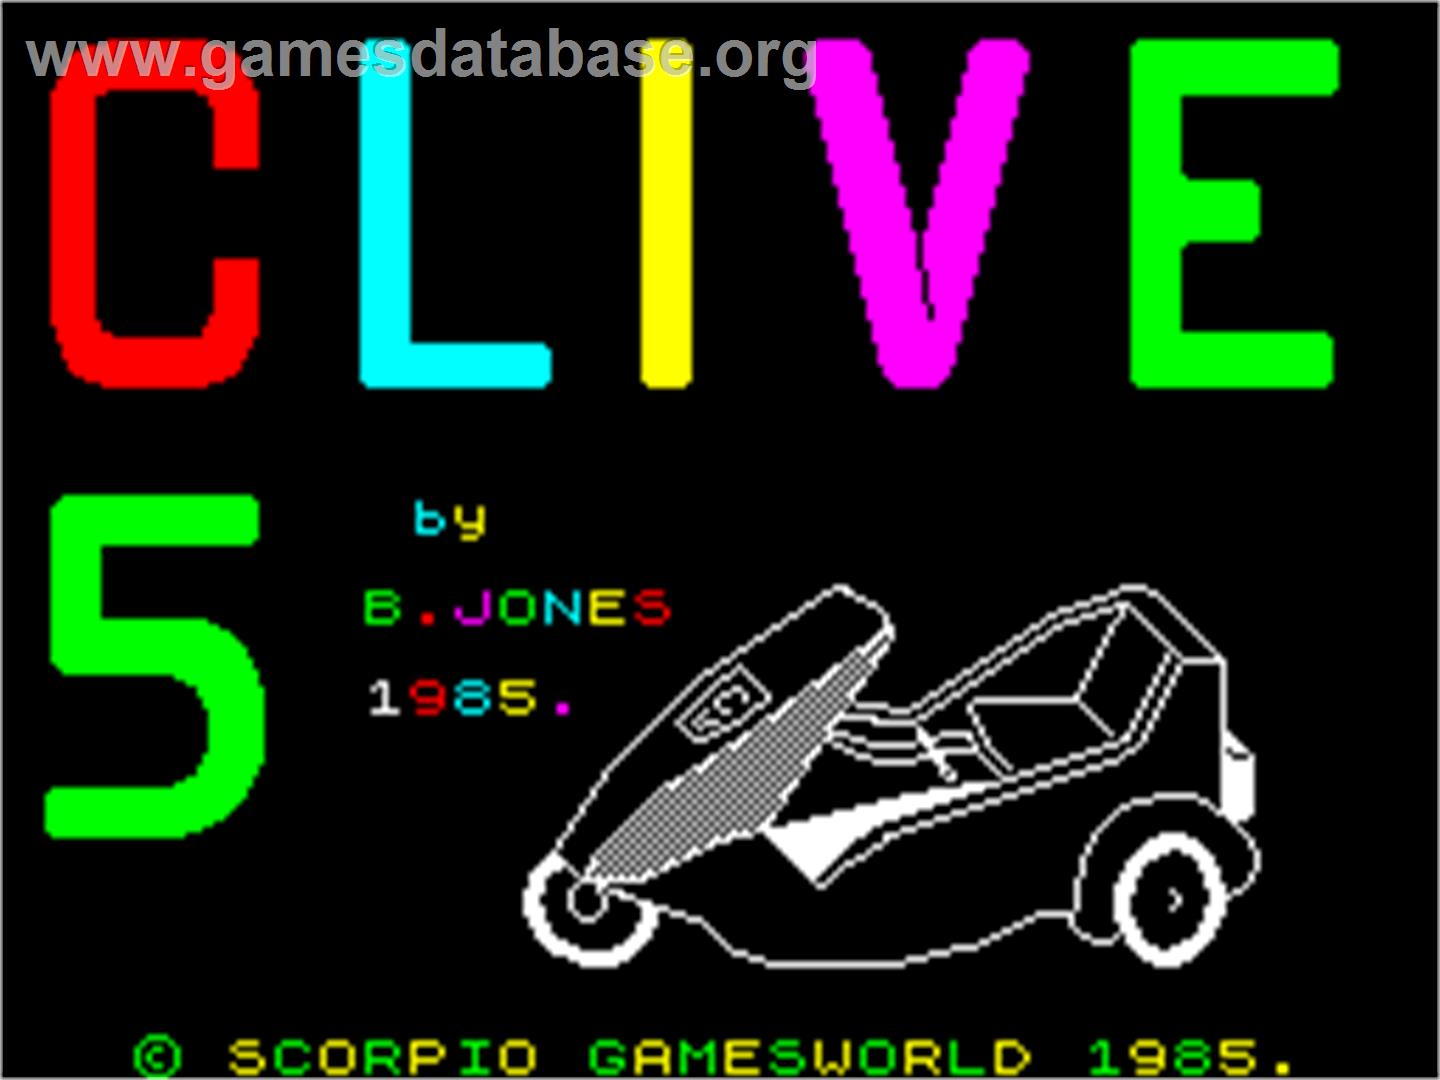 C5 Clive - Sinclair ZX Spectrum - Artwork - Title Screen